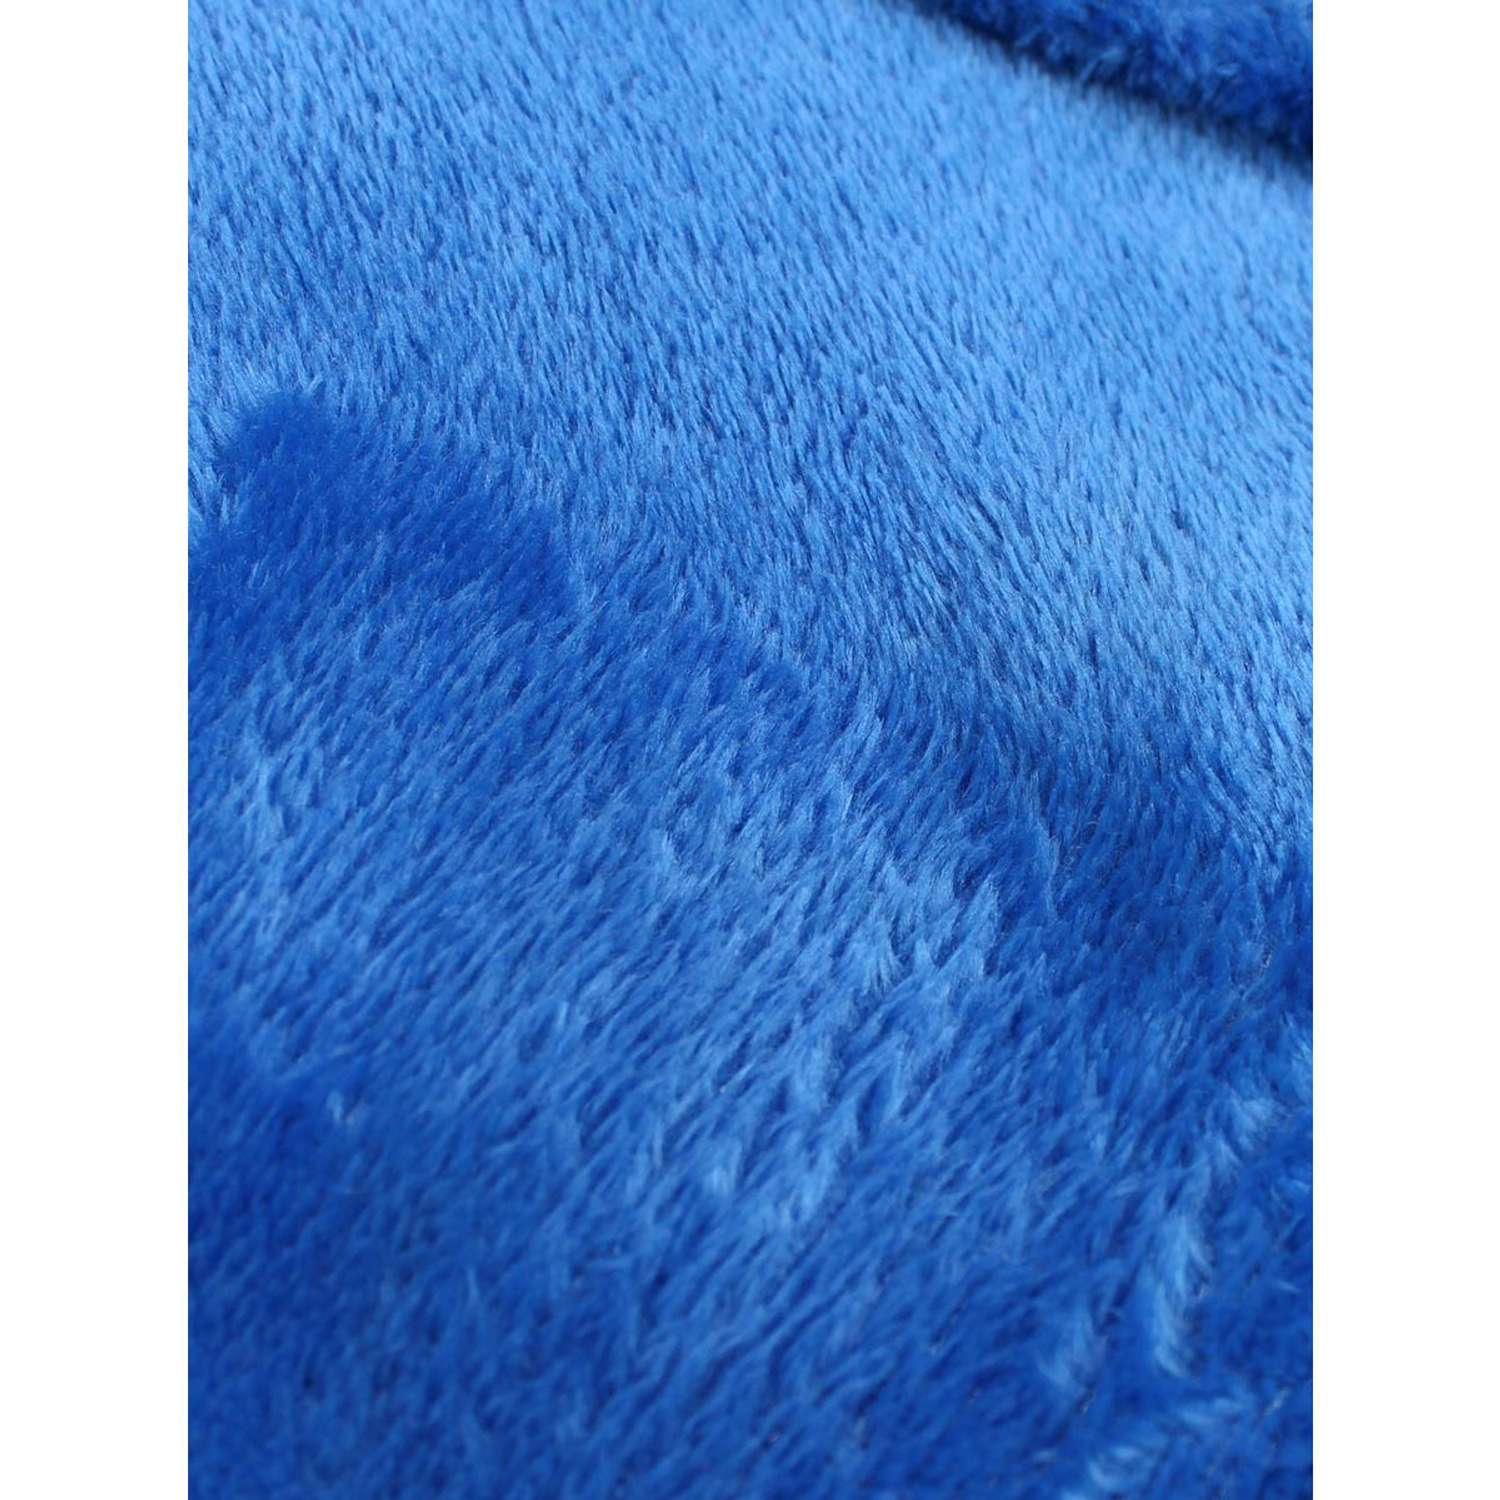 Плед детский Михи-Михи Хаги Ваги с капюшоном Хагги Вагги синий 150х70 см - фото 5